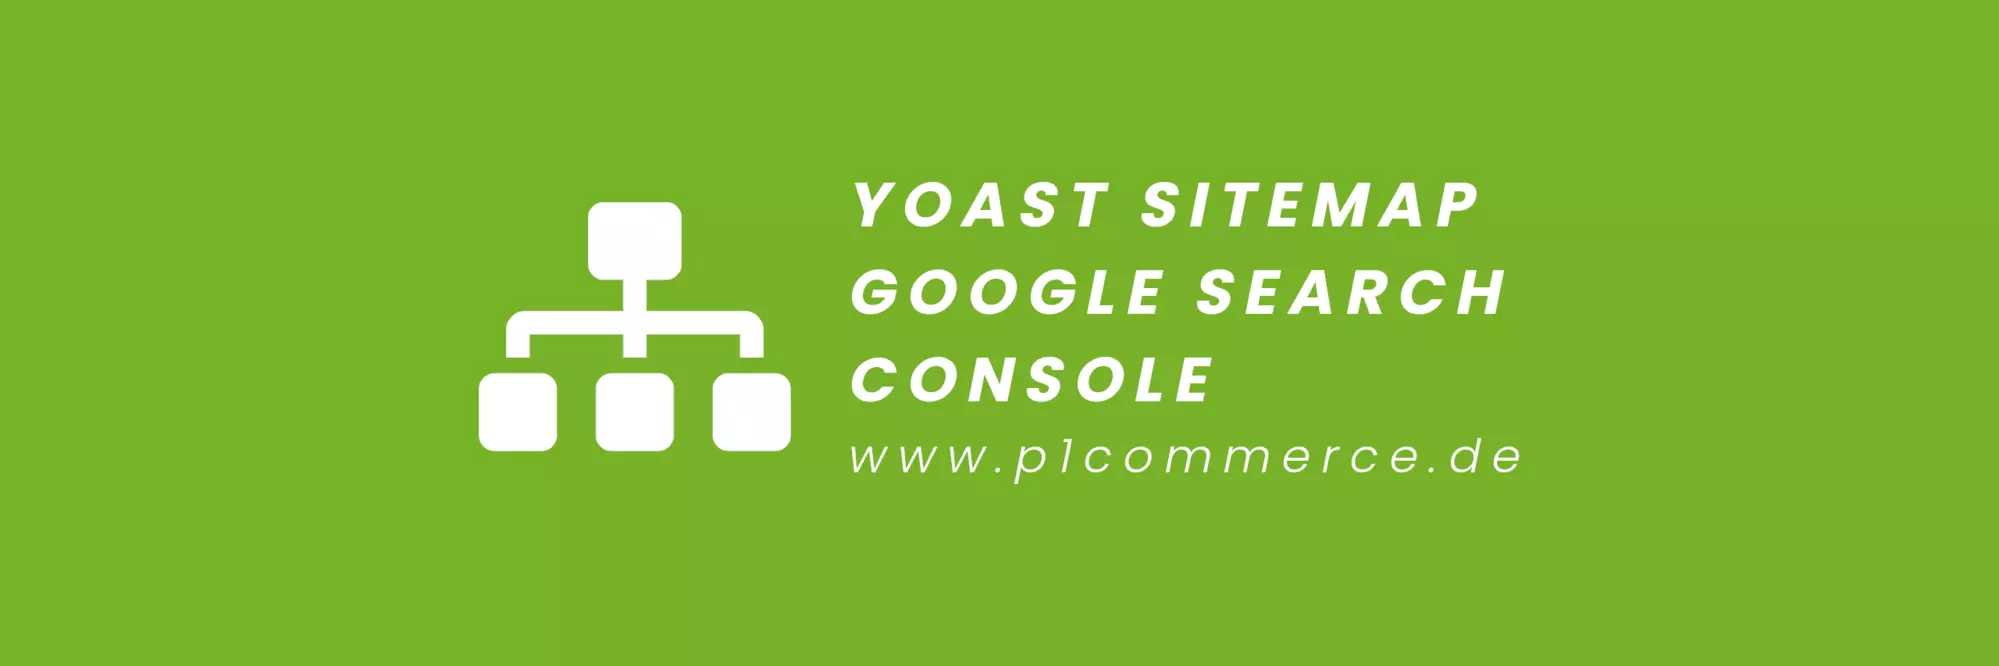 Yoast Sitemap in Google Search Console hinzufuegen p1 commerce